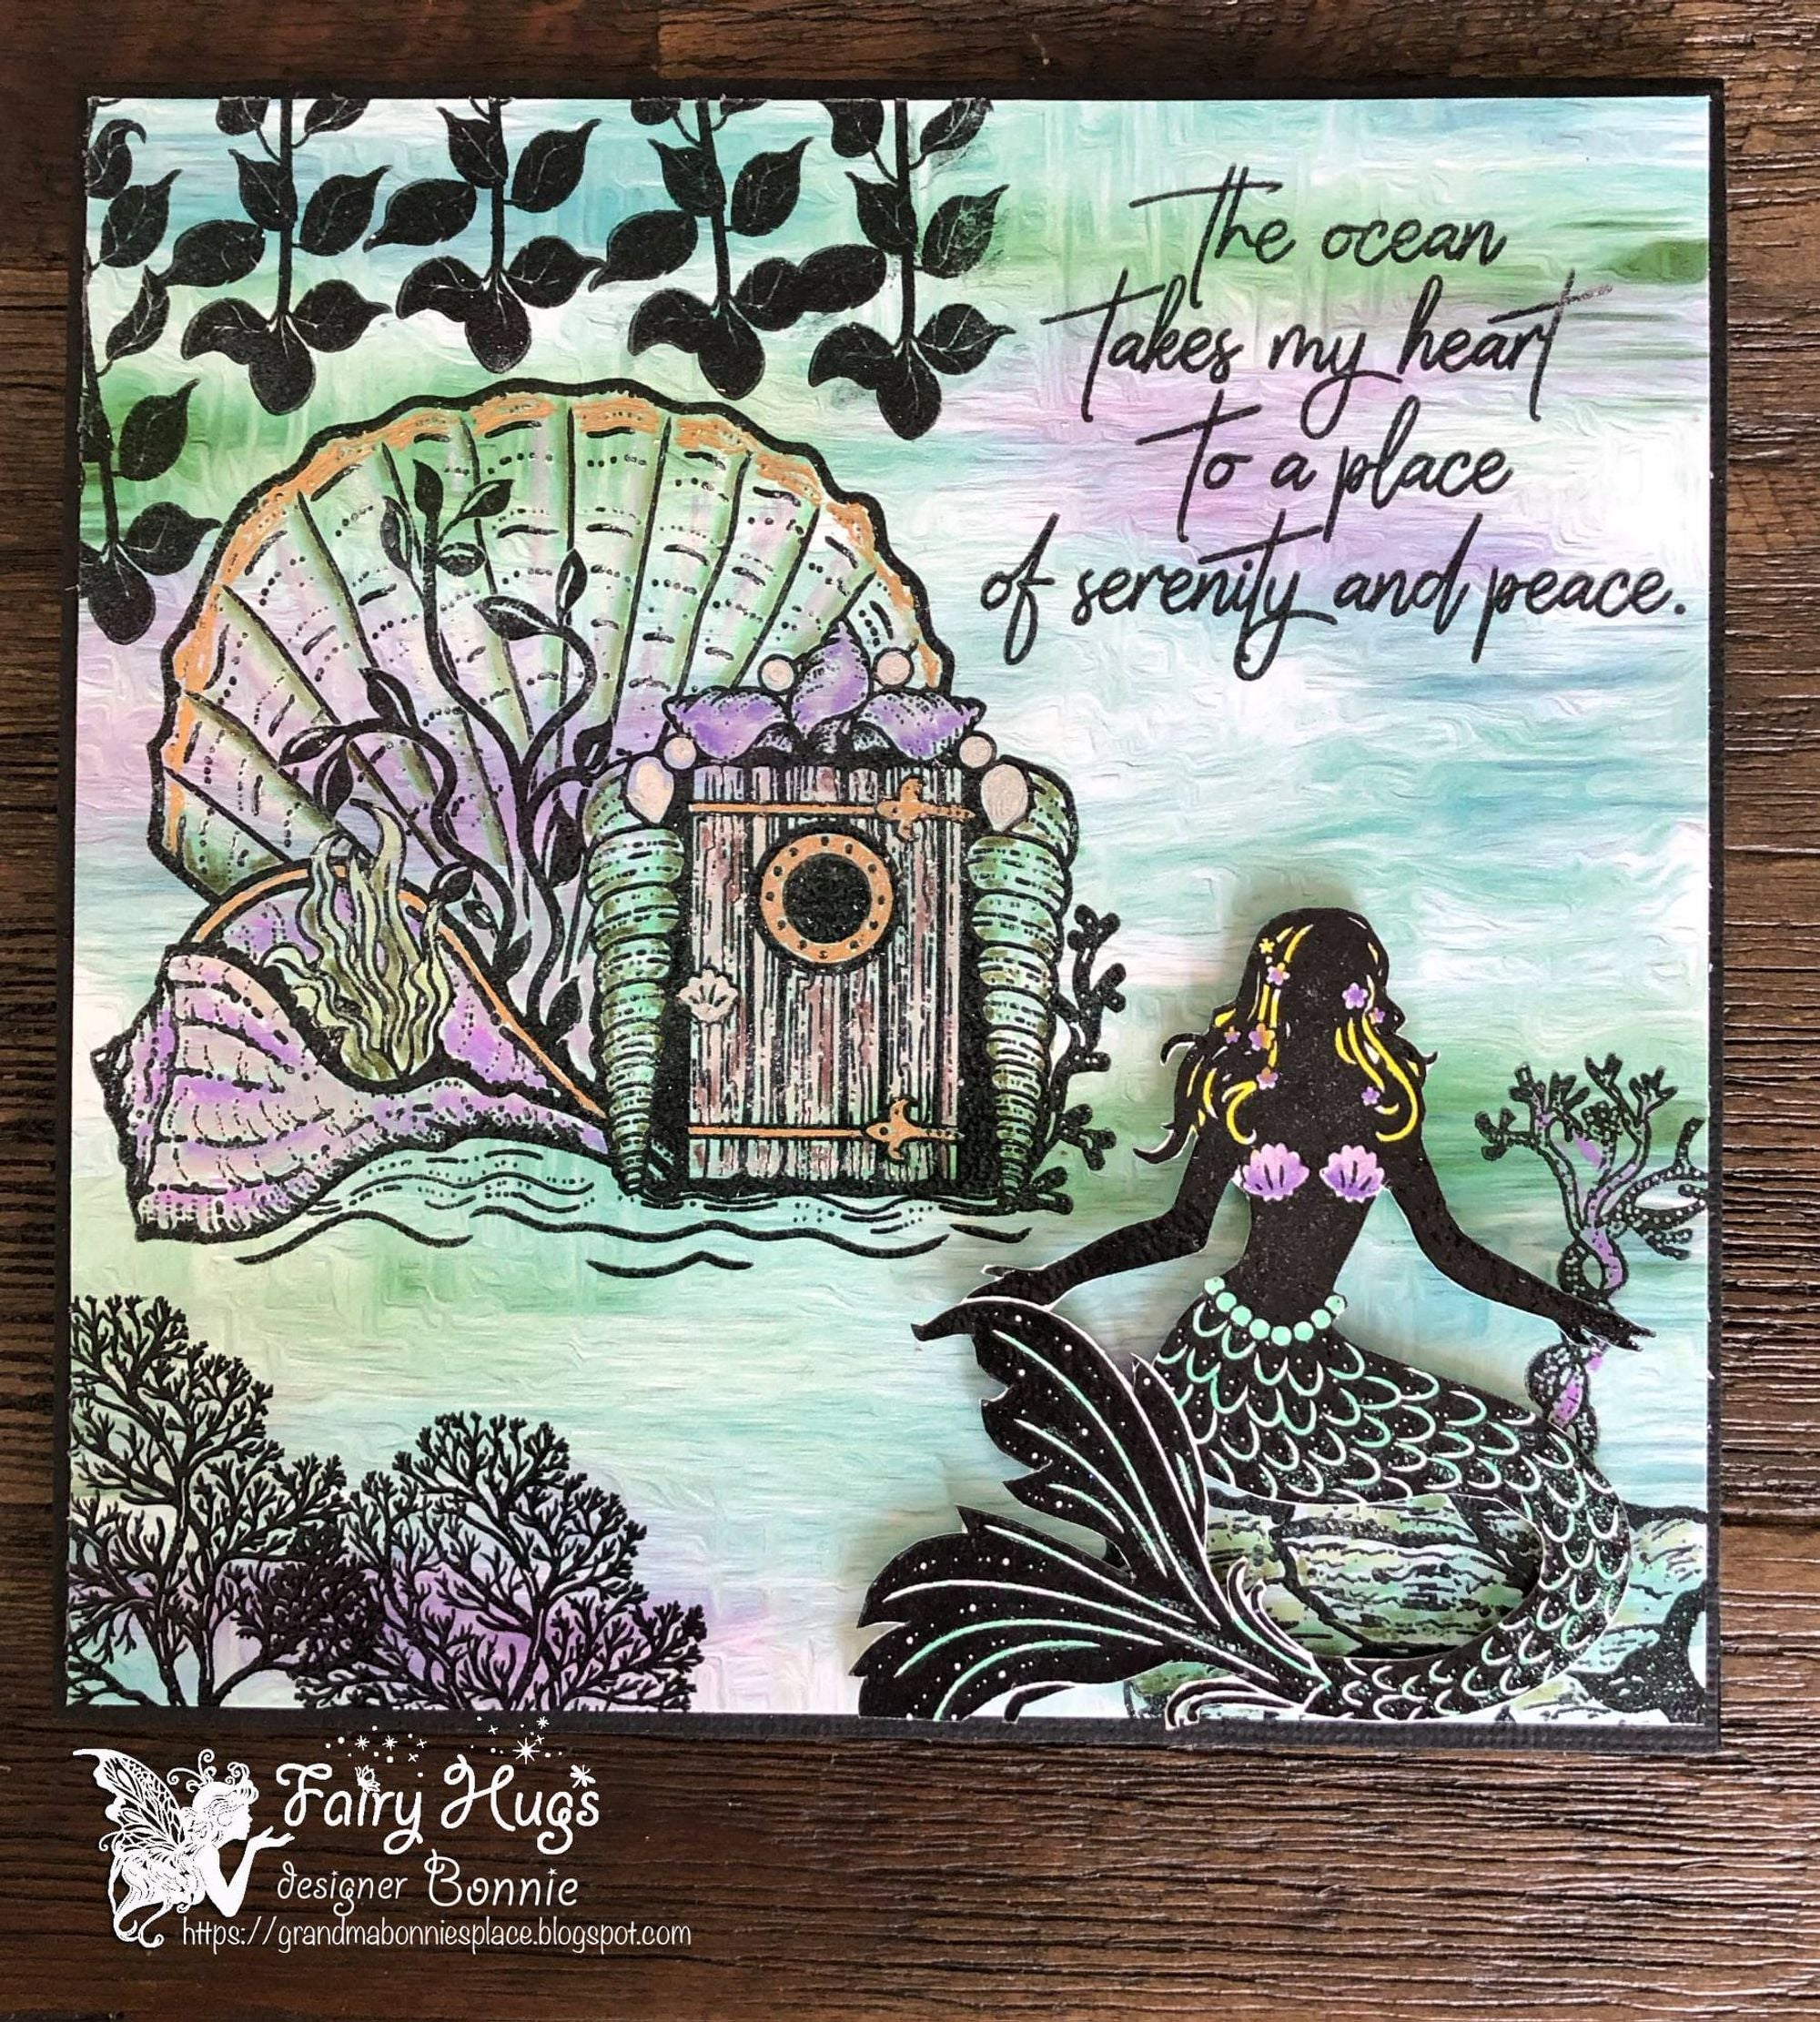 Fairy Hugs Stamps - Twisted Seaweed